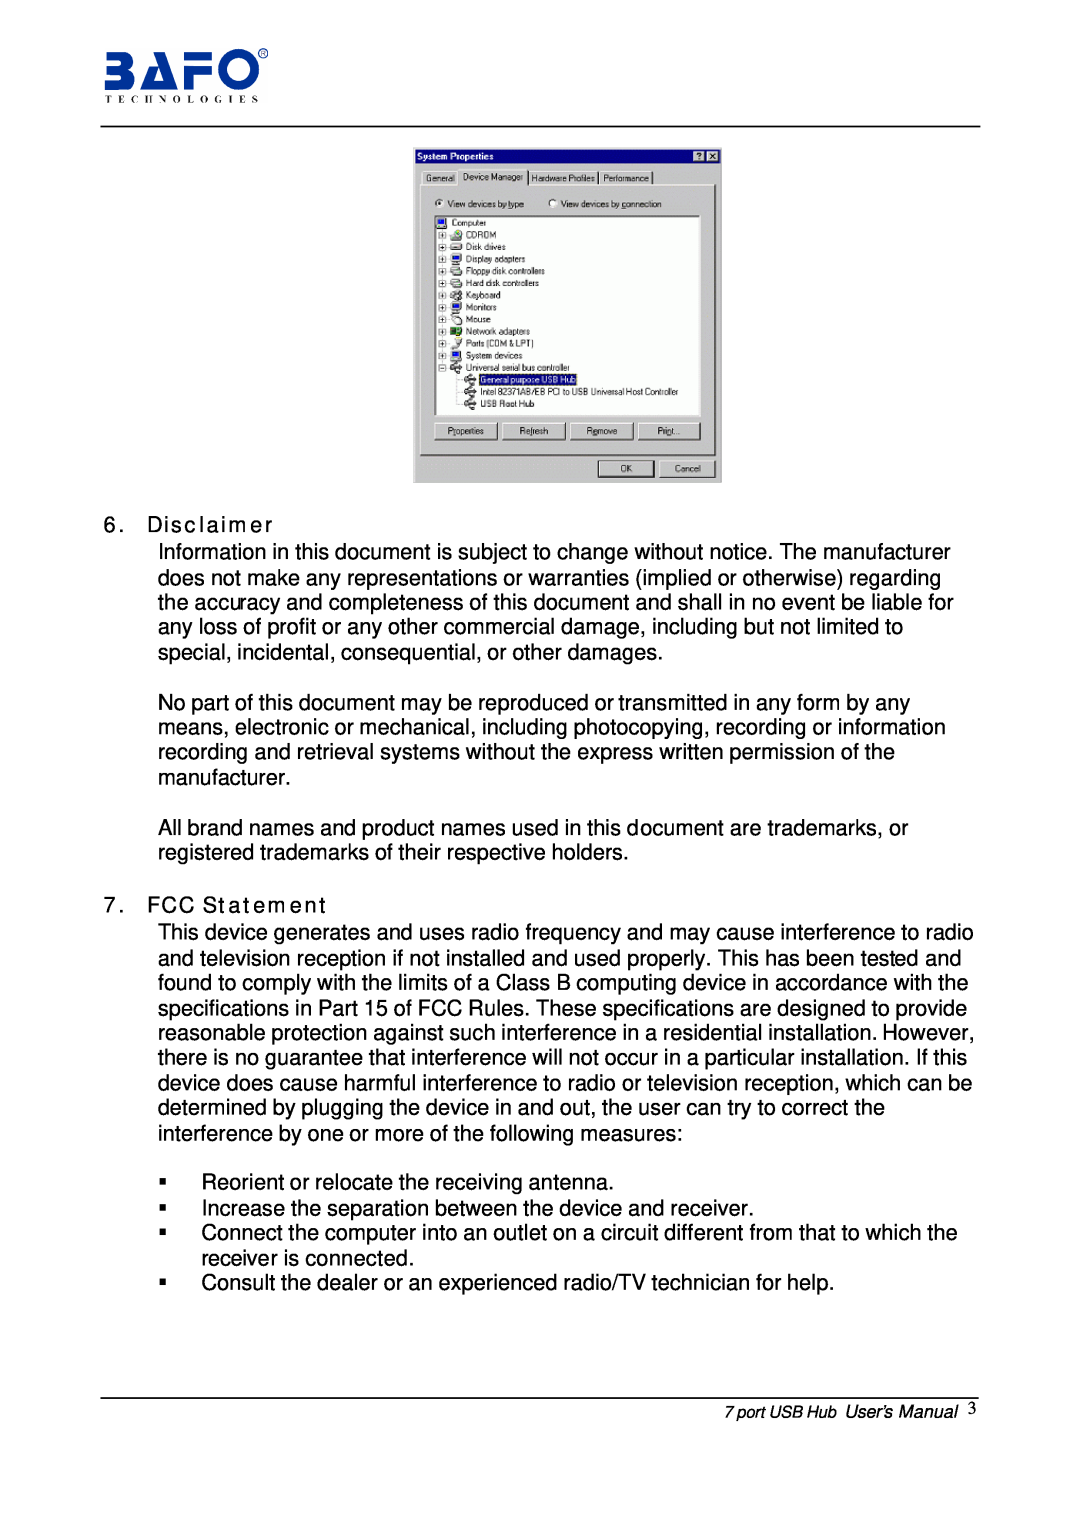 Bafo Technologies BF-700 user manual Disclaimer, FCC Statement 